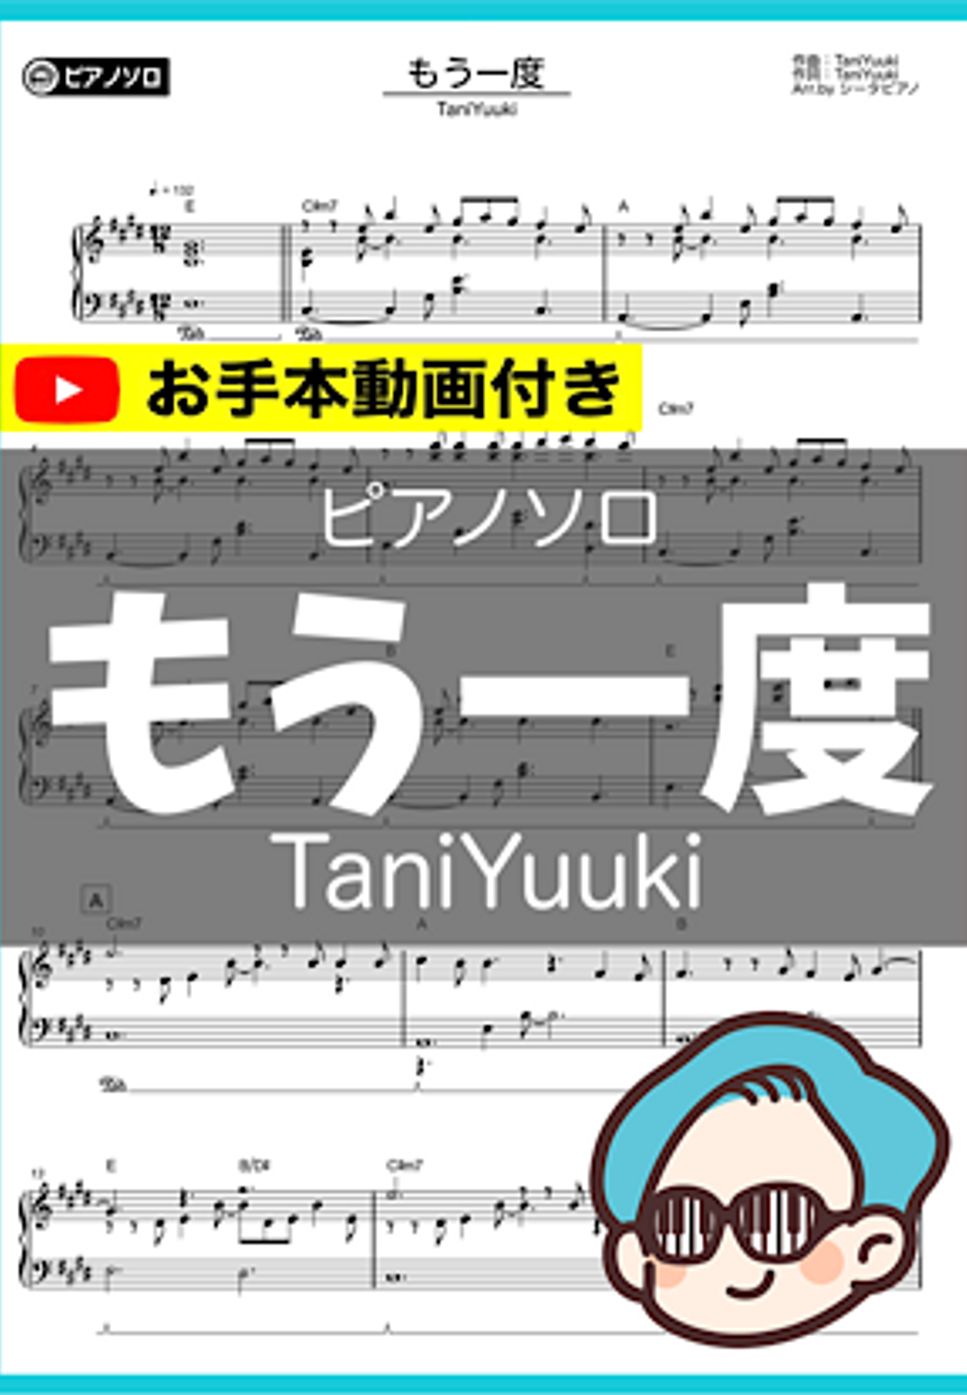 TaniYuuki - もう一度 by シータピアノ